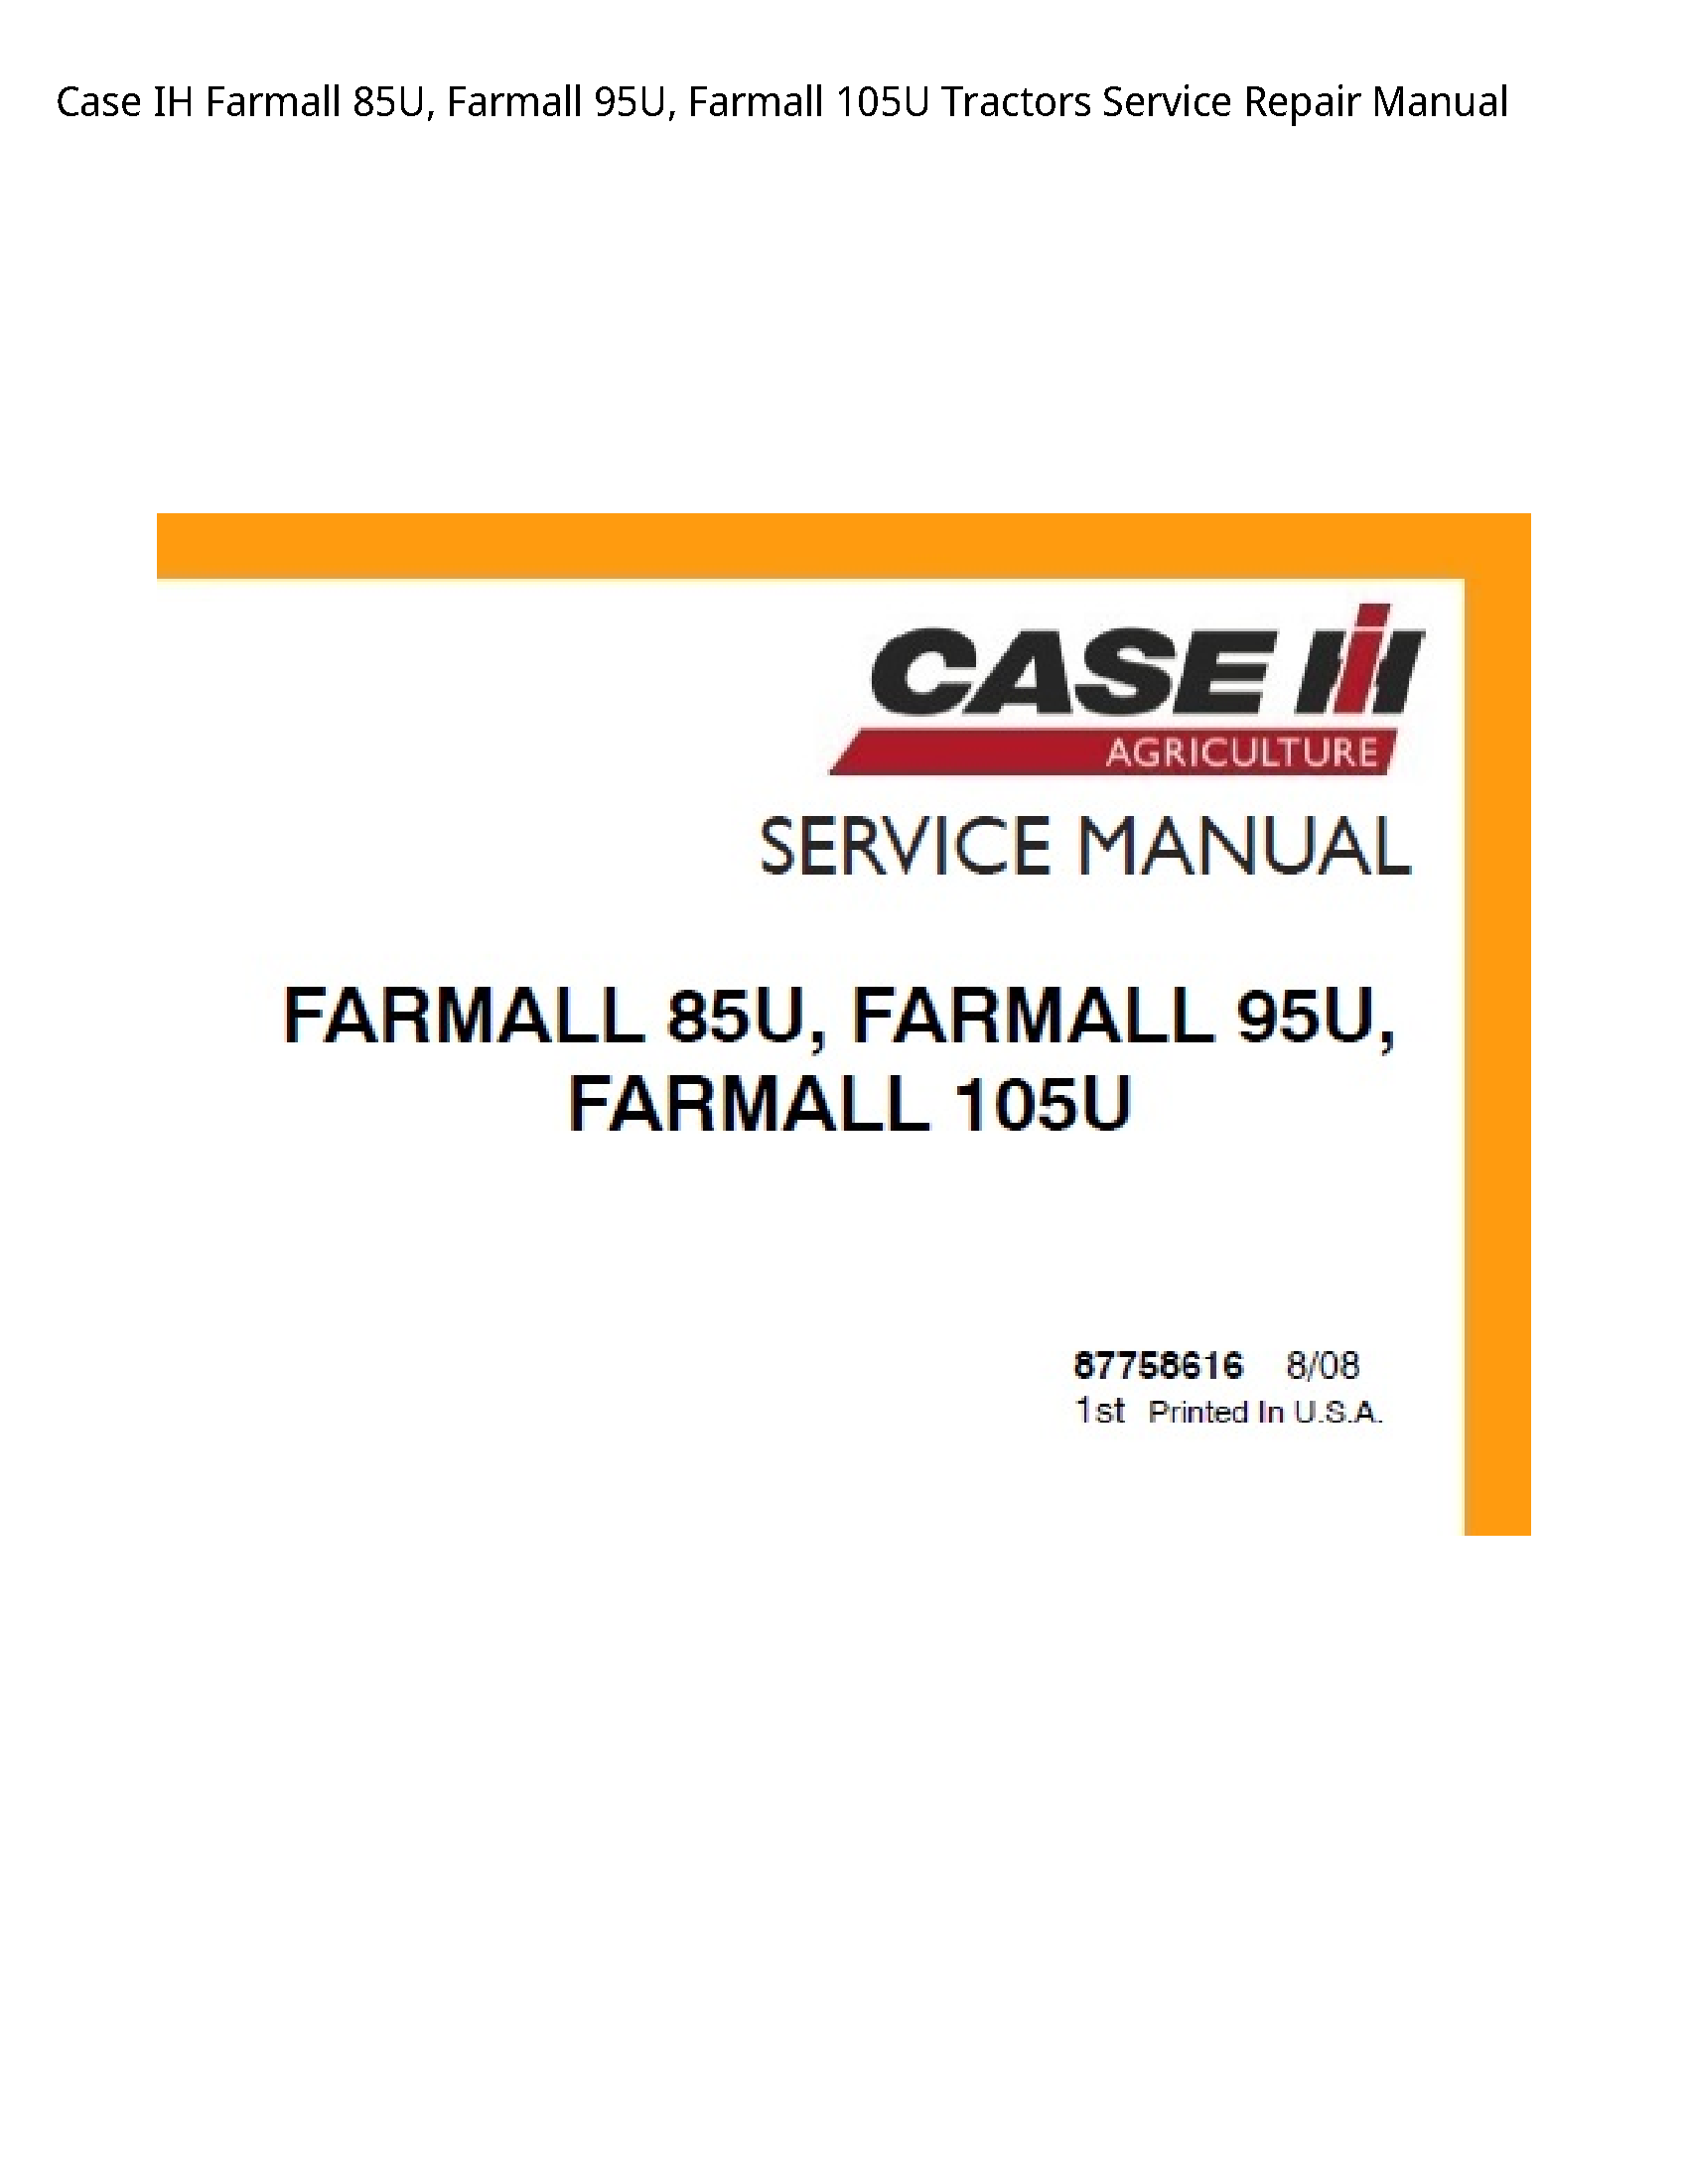 Case/Case IH 85U IH Farmall Farmall Farmall Tractors manual